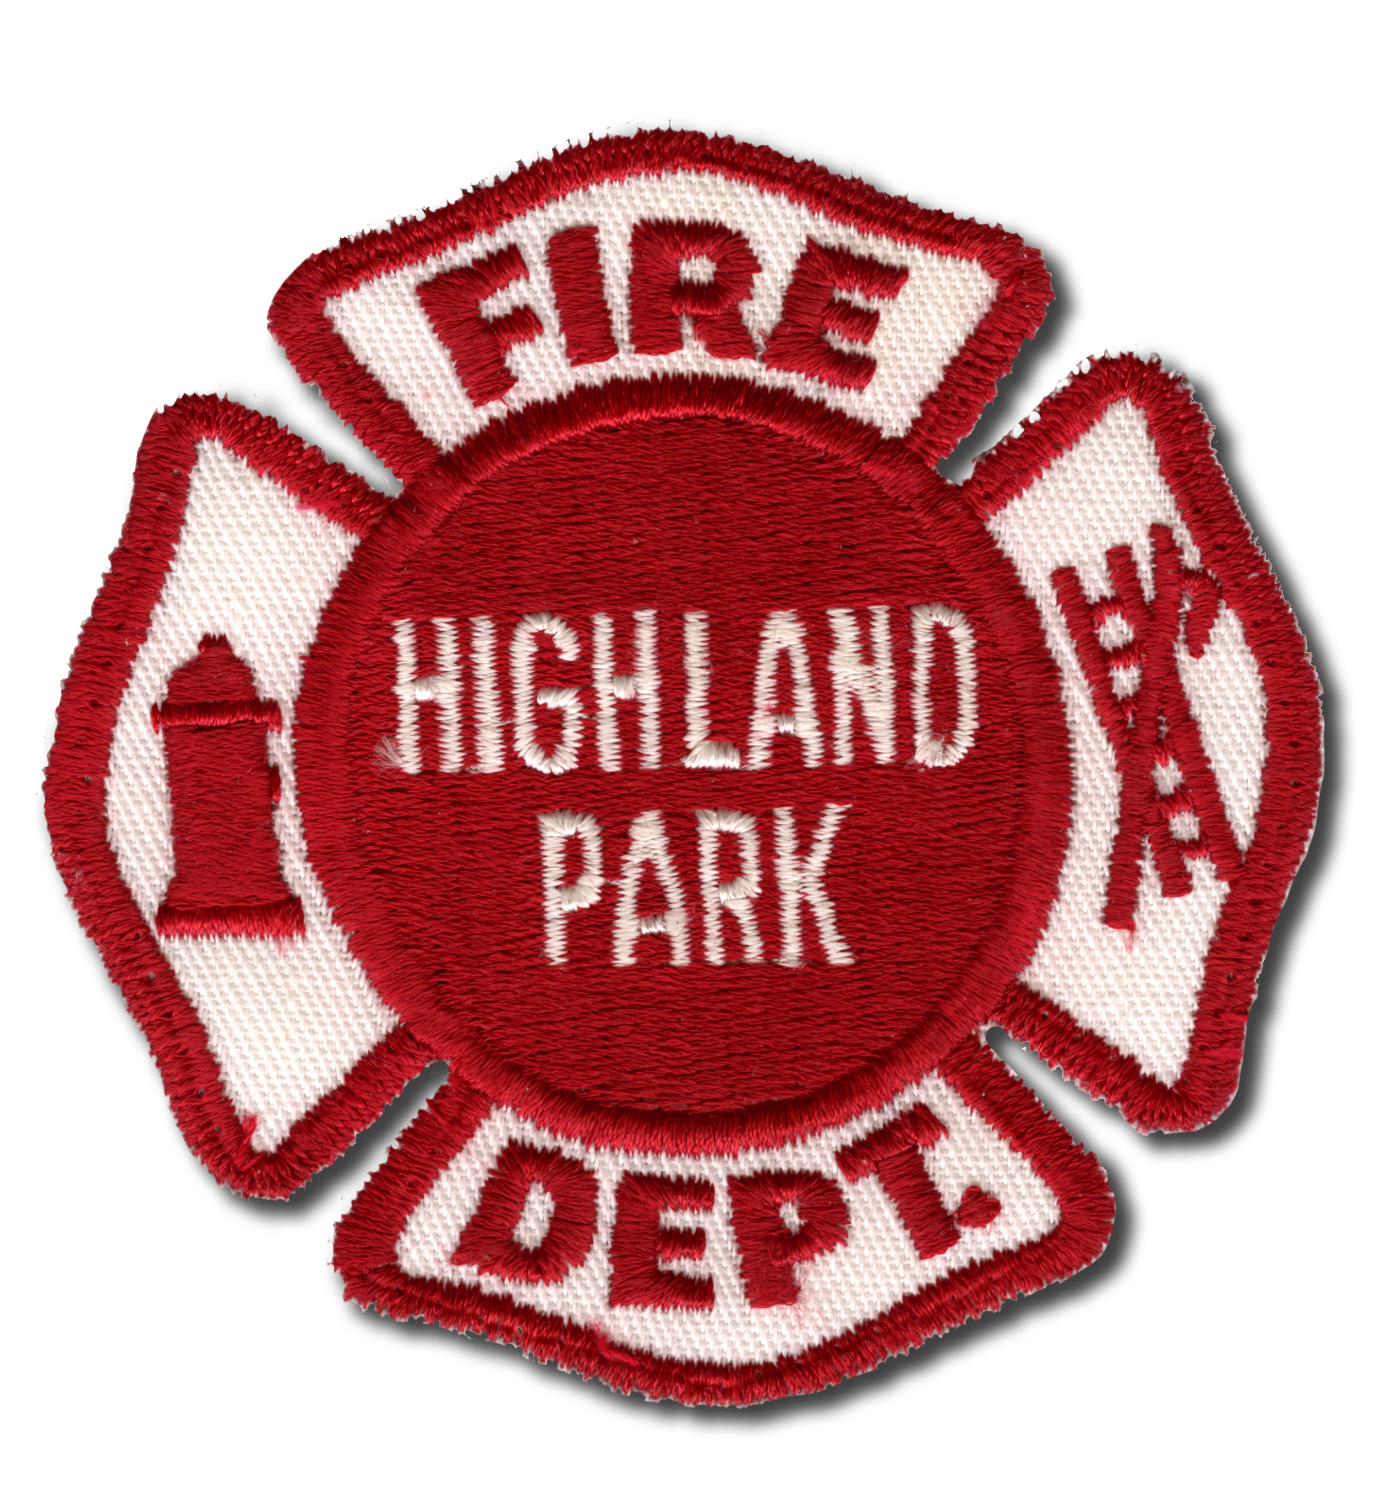 Highland Park Fire Department patch